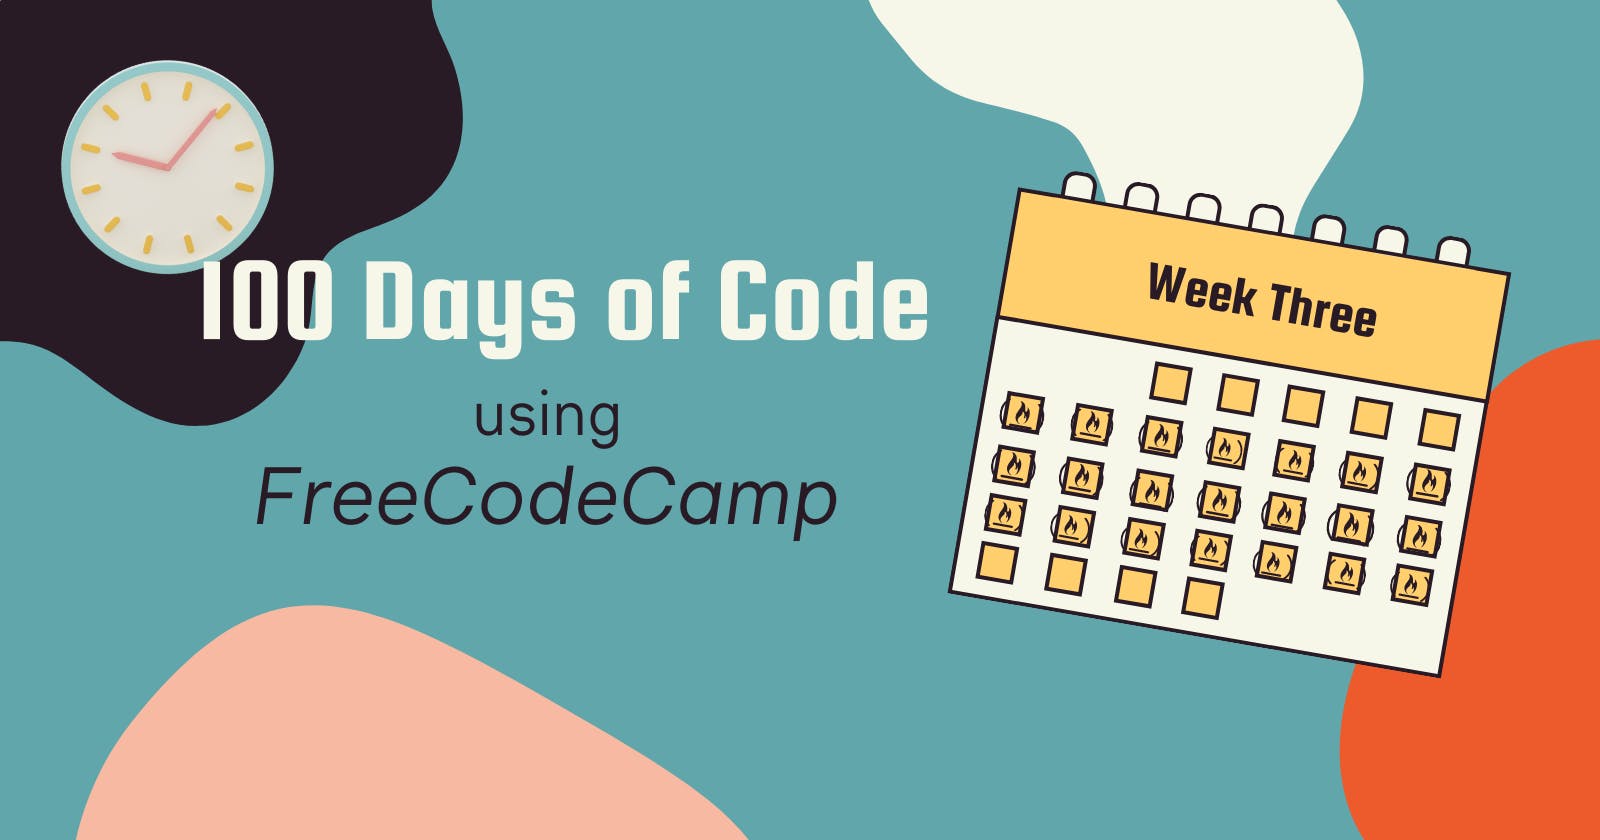 100DaysOfCode using FreeCodeCamp - Week 3